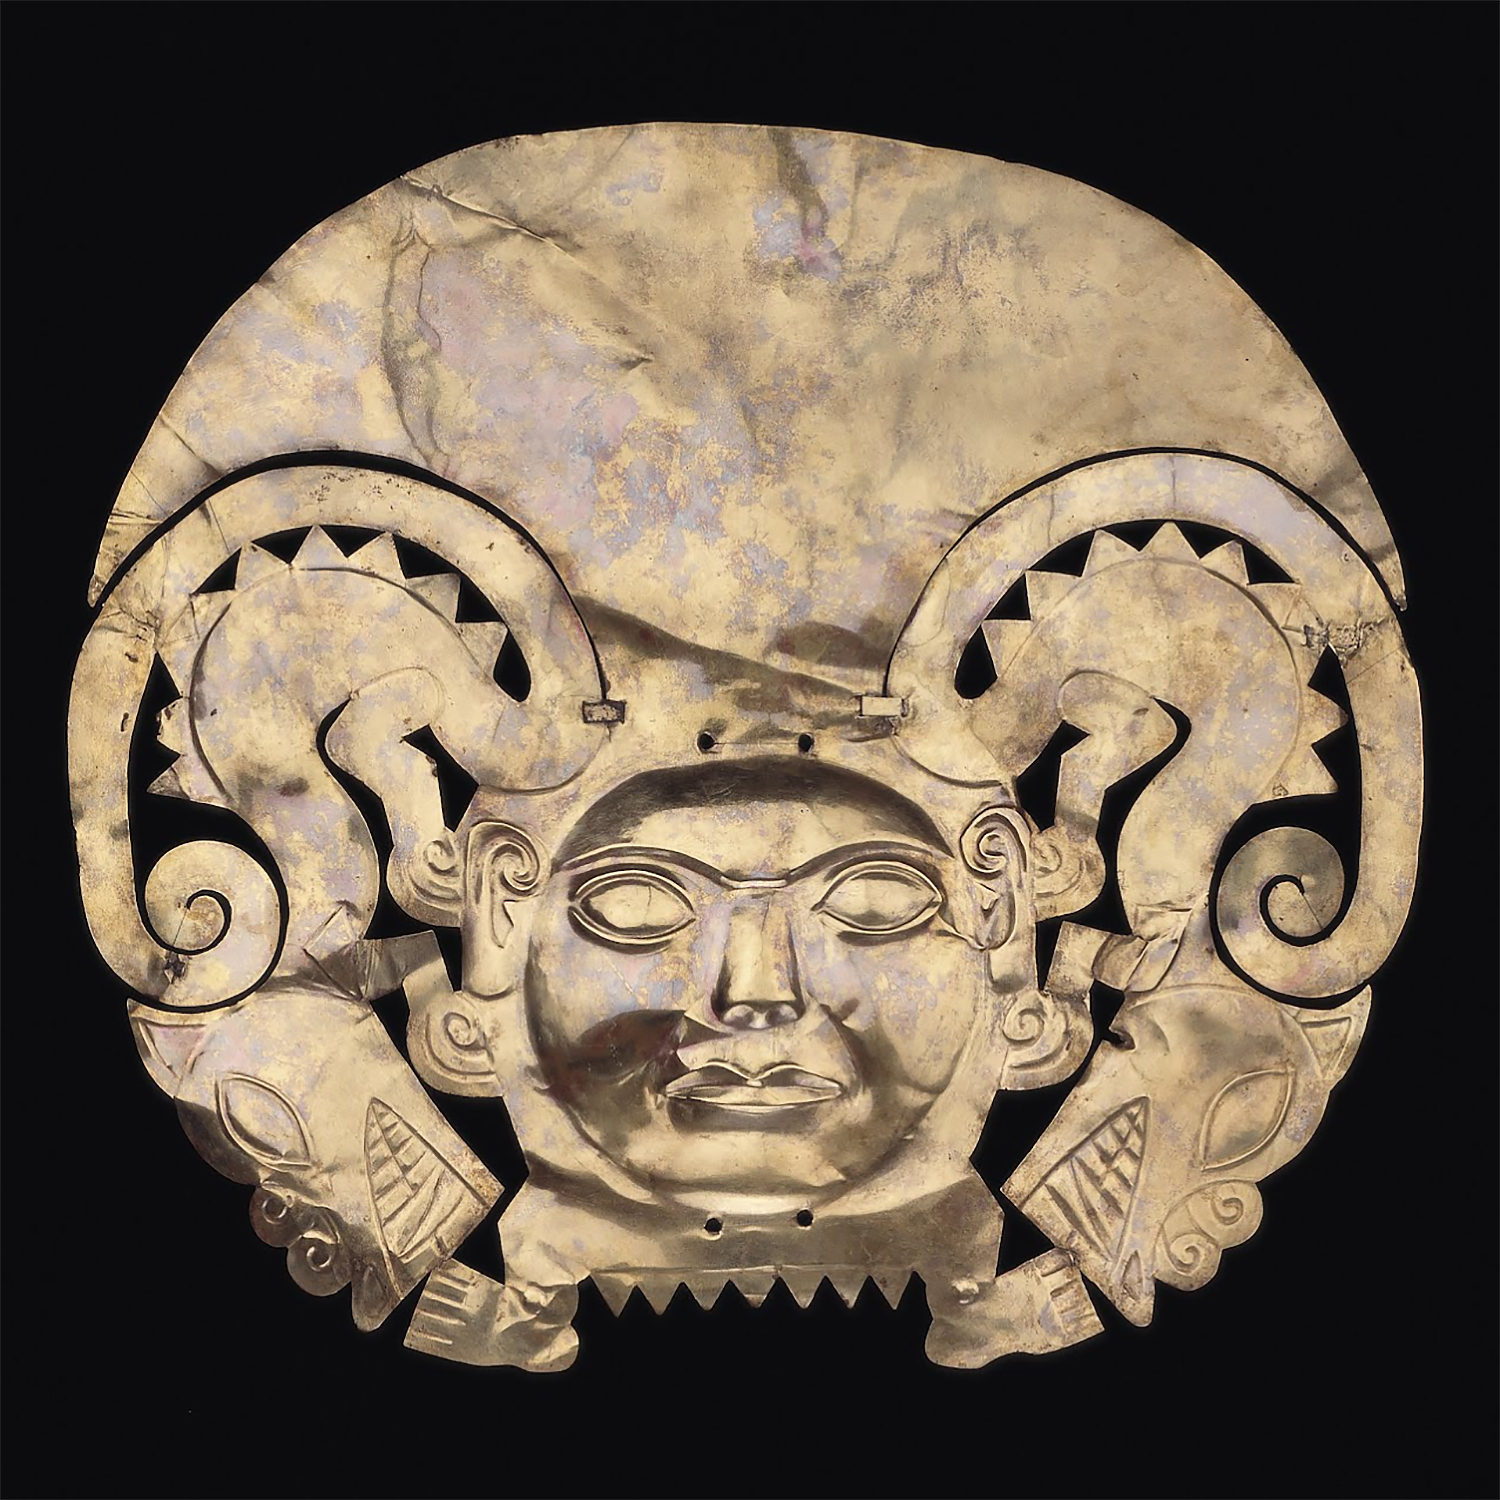 Золотая корона. Моче, 1-800 гг. н.э. Коллекция Museo Larco, Lima.